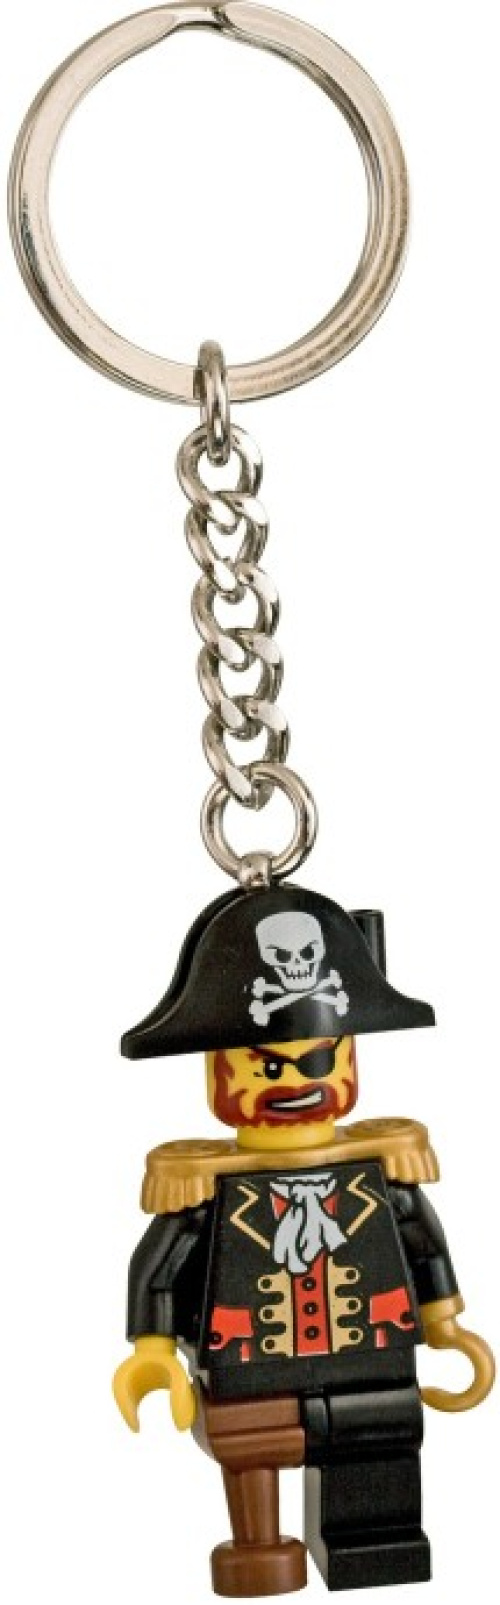 852544-1 Pirate Captain Key Chain